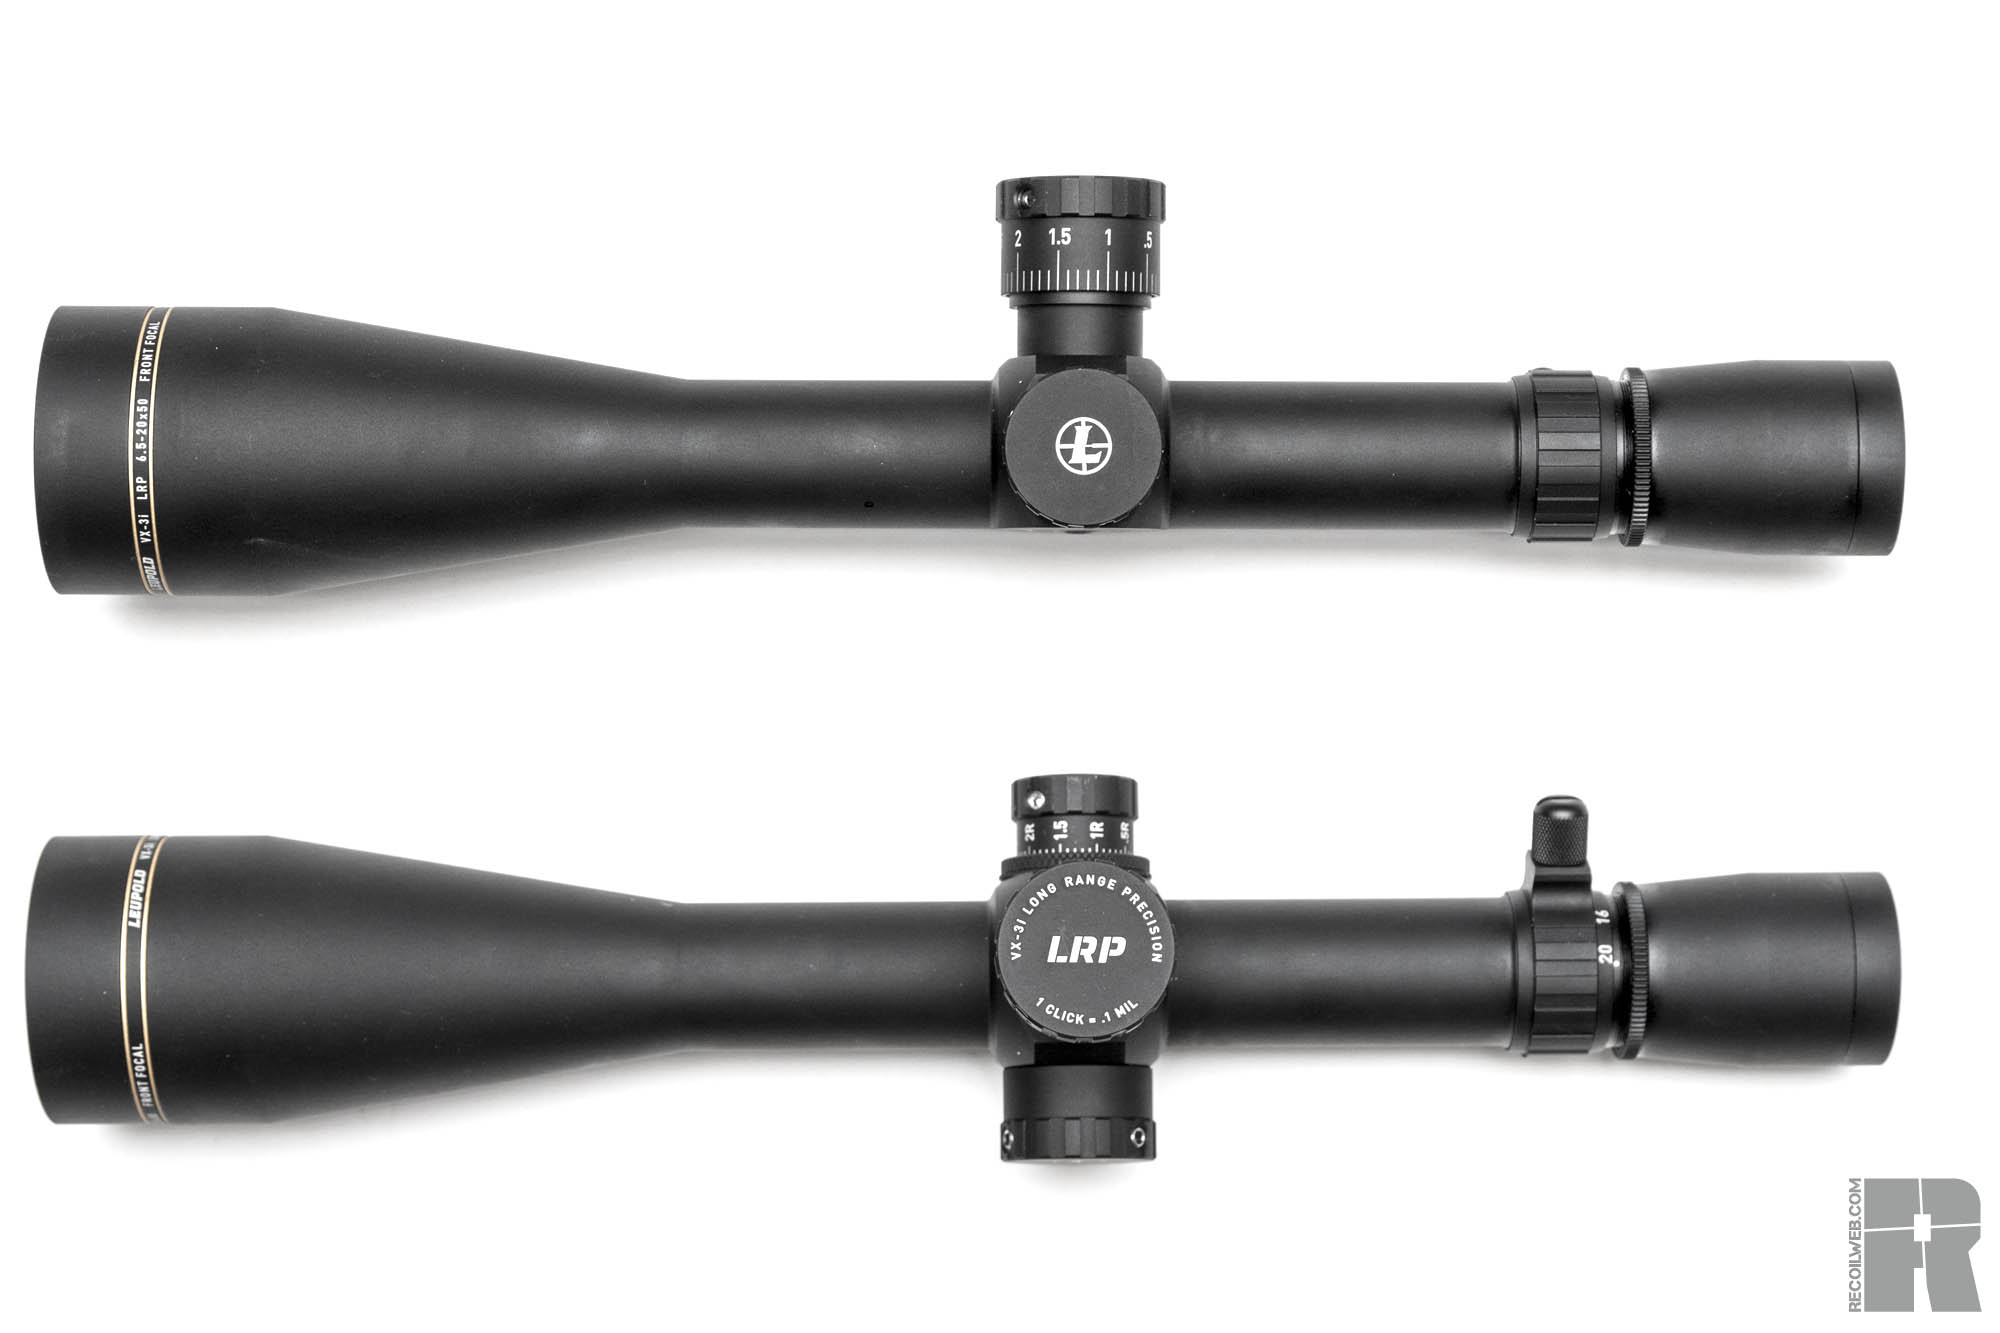 Leupold VX-31 LRP 6.5-20x rifle scopes